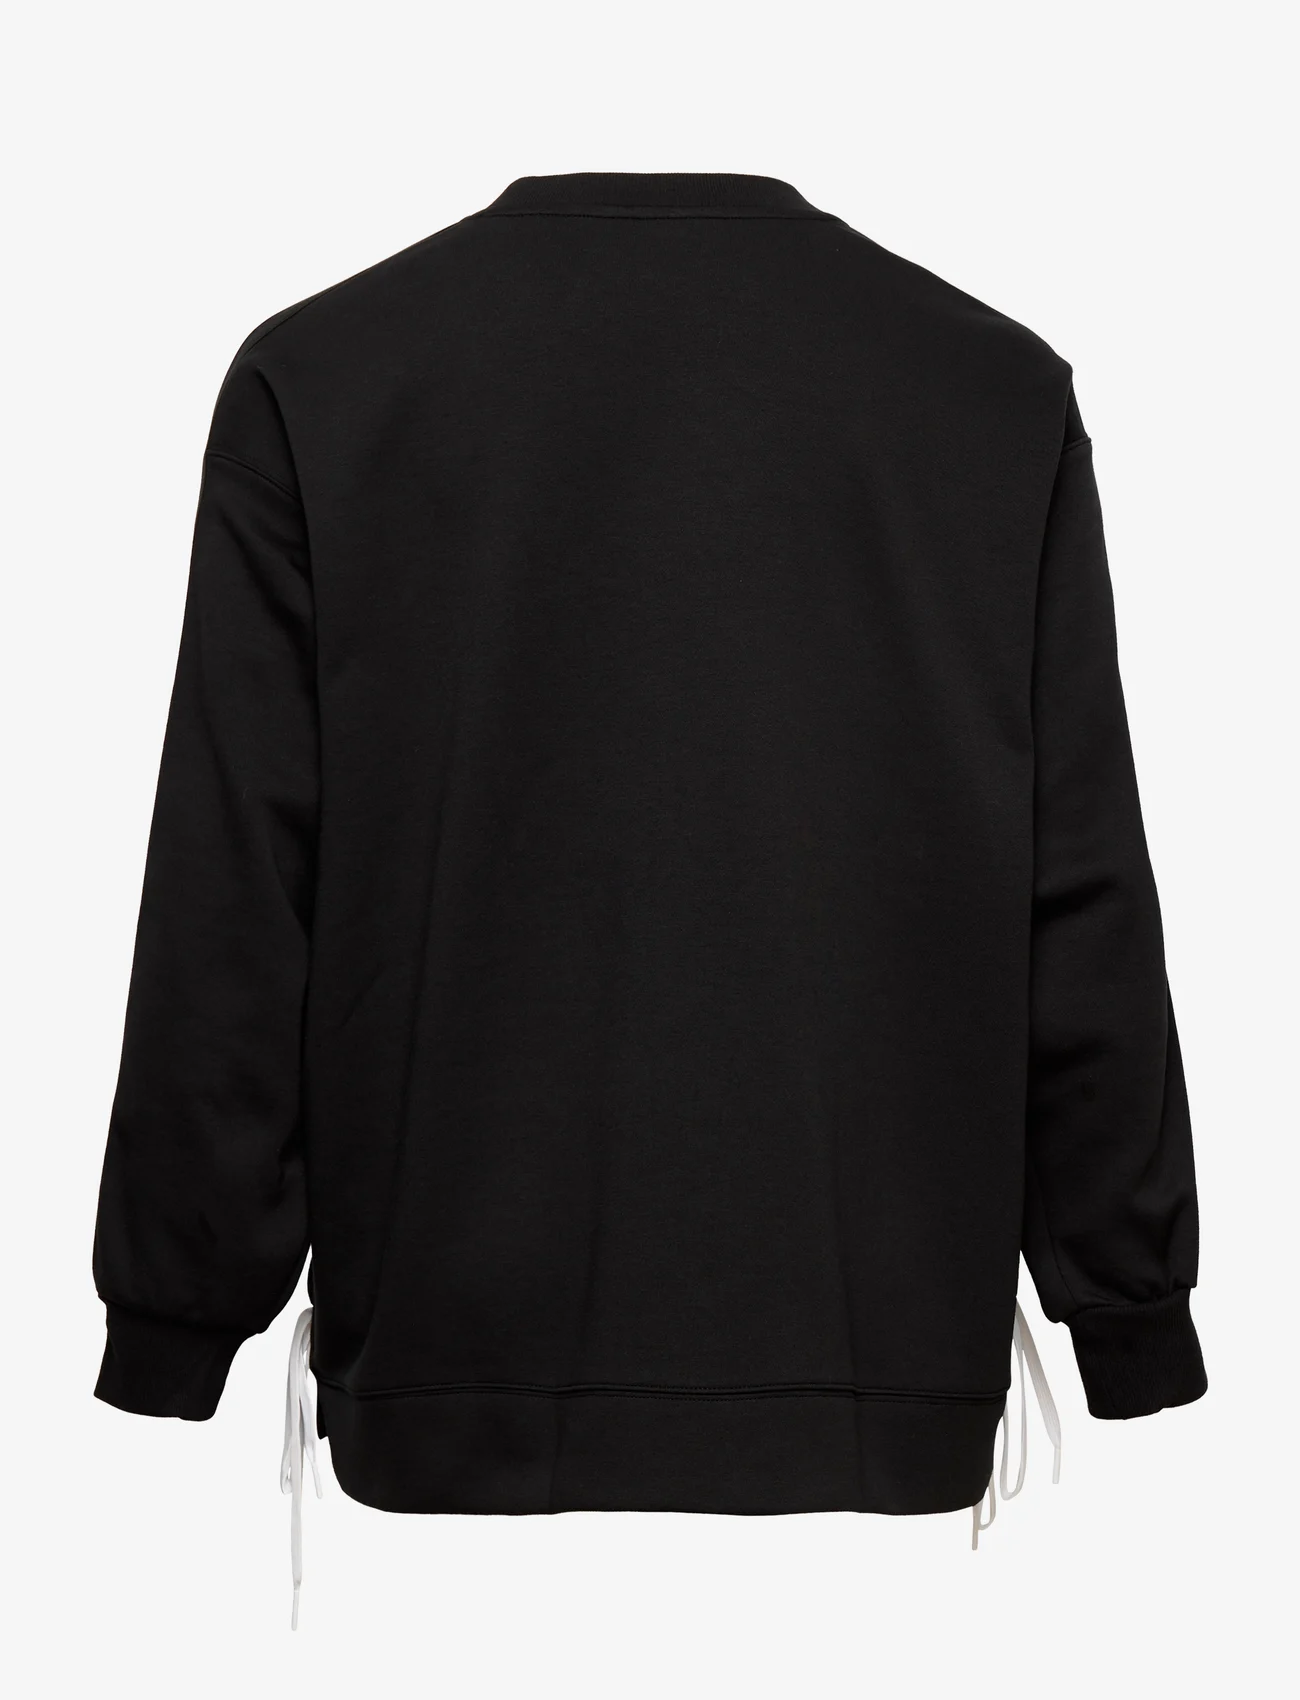 adidas Originals - Always Original Laced Crew Sweatshirt (Plus Size) - women - black - 1